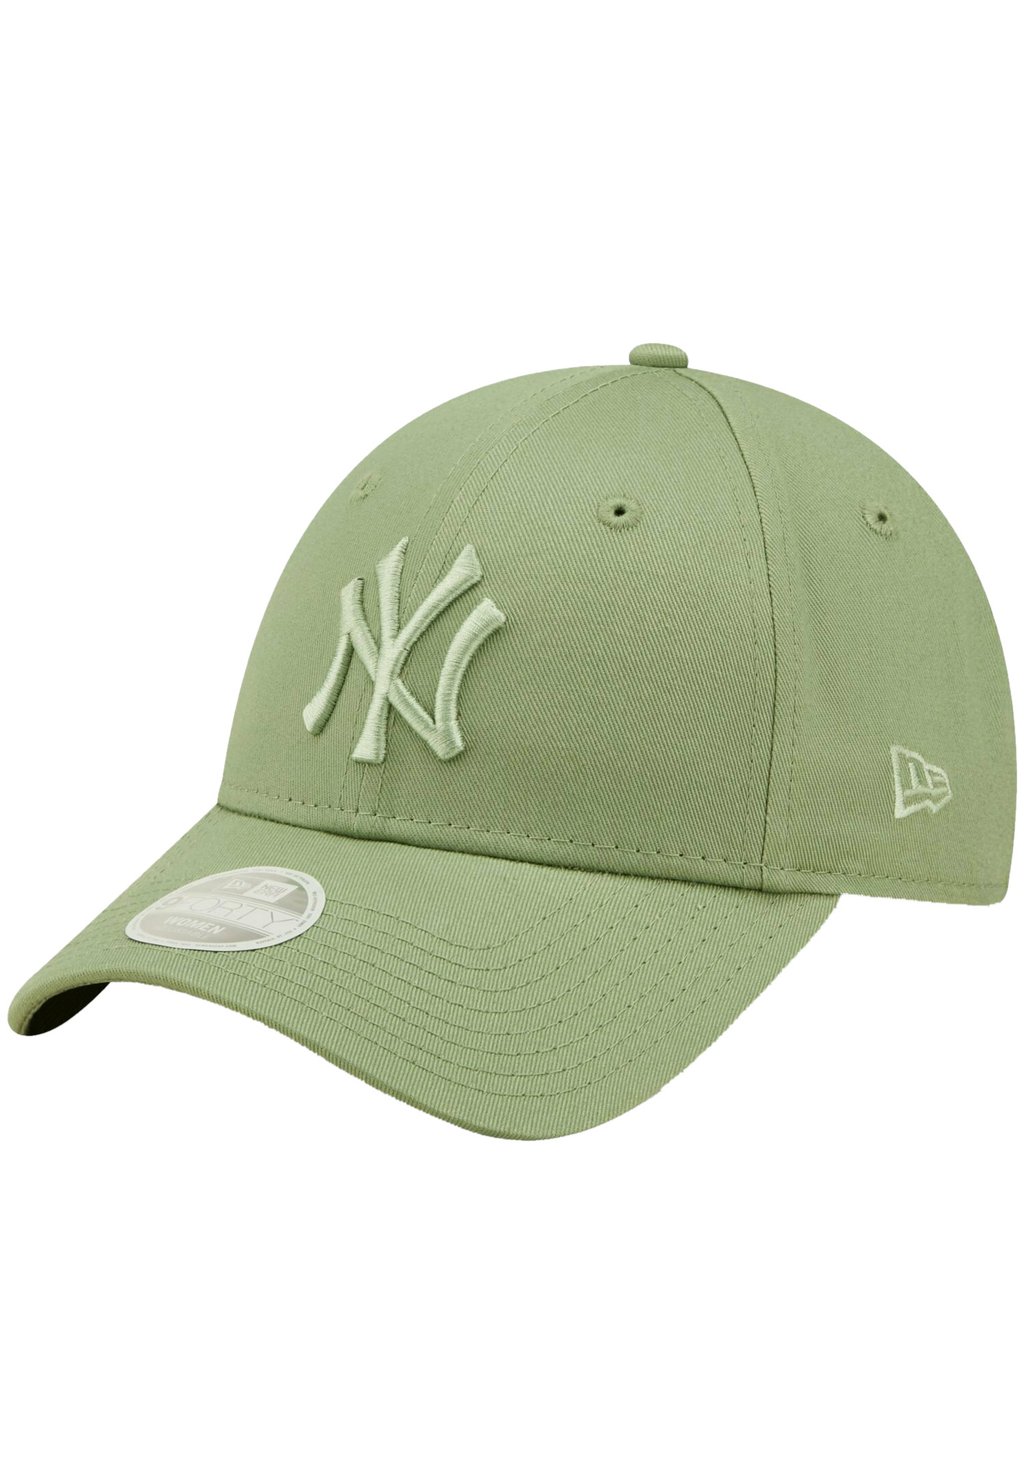 ancient jade identification（90%new） Бейсболка 9FORTY NEW YORK YANKEES JADE New Era, цвет jade